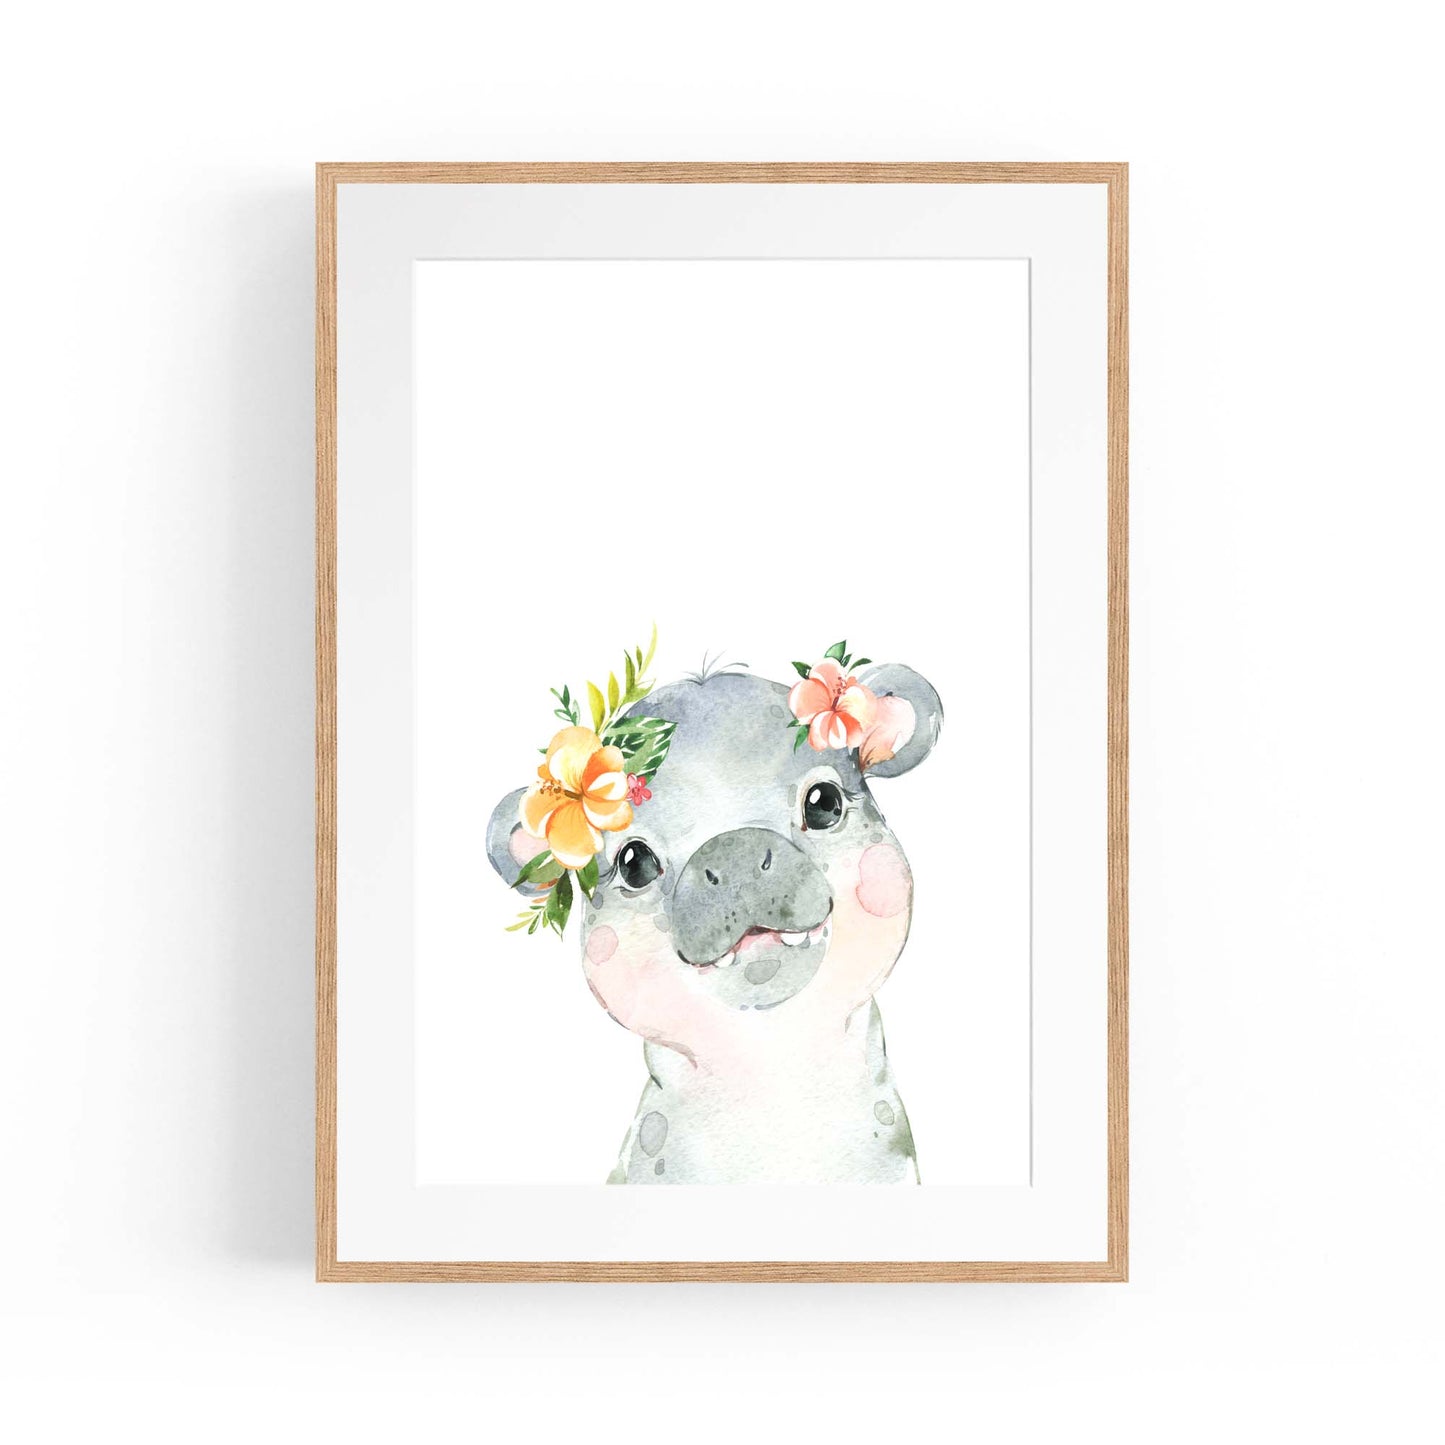 Cute Baby Hippo Nursery Animal Gift Wall Art #2 - The Affordable Art Company